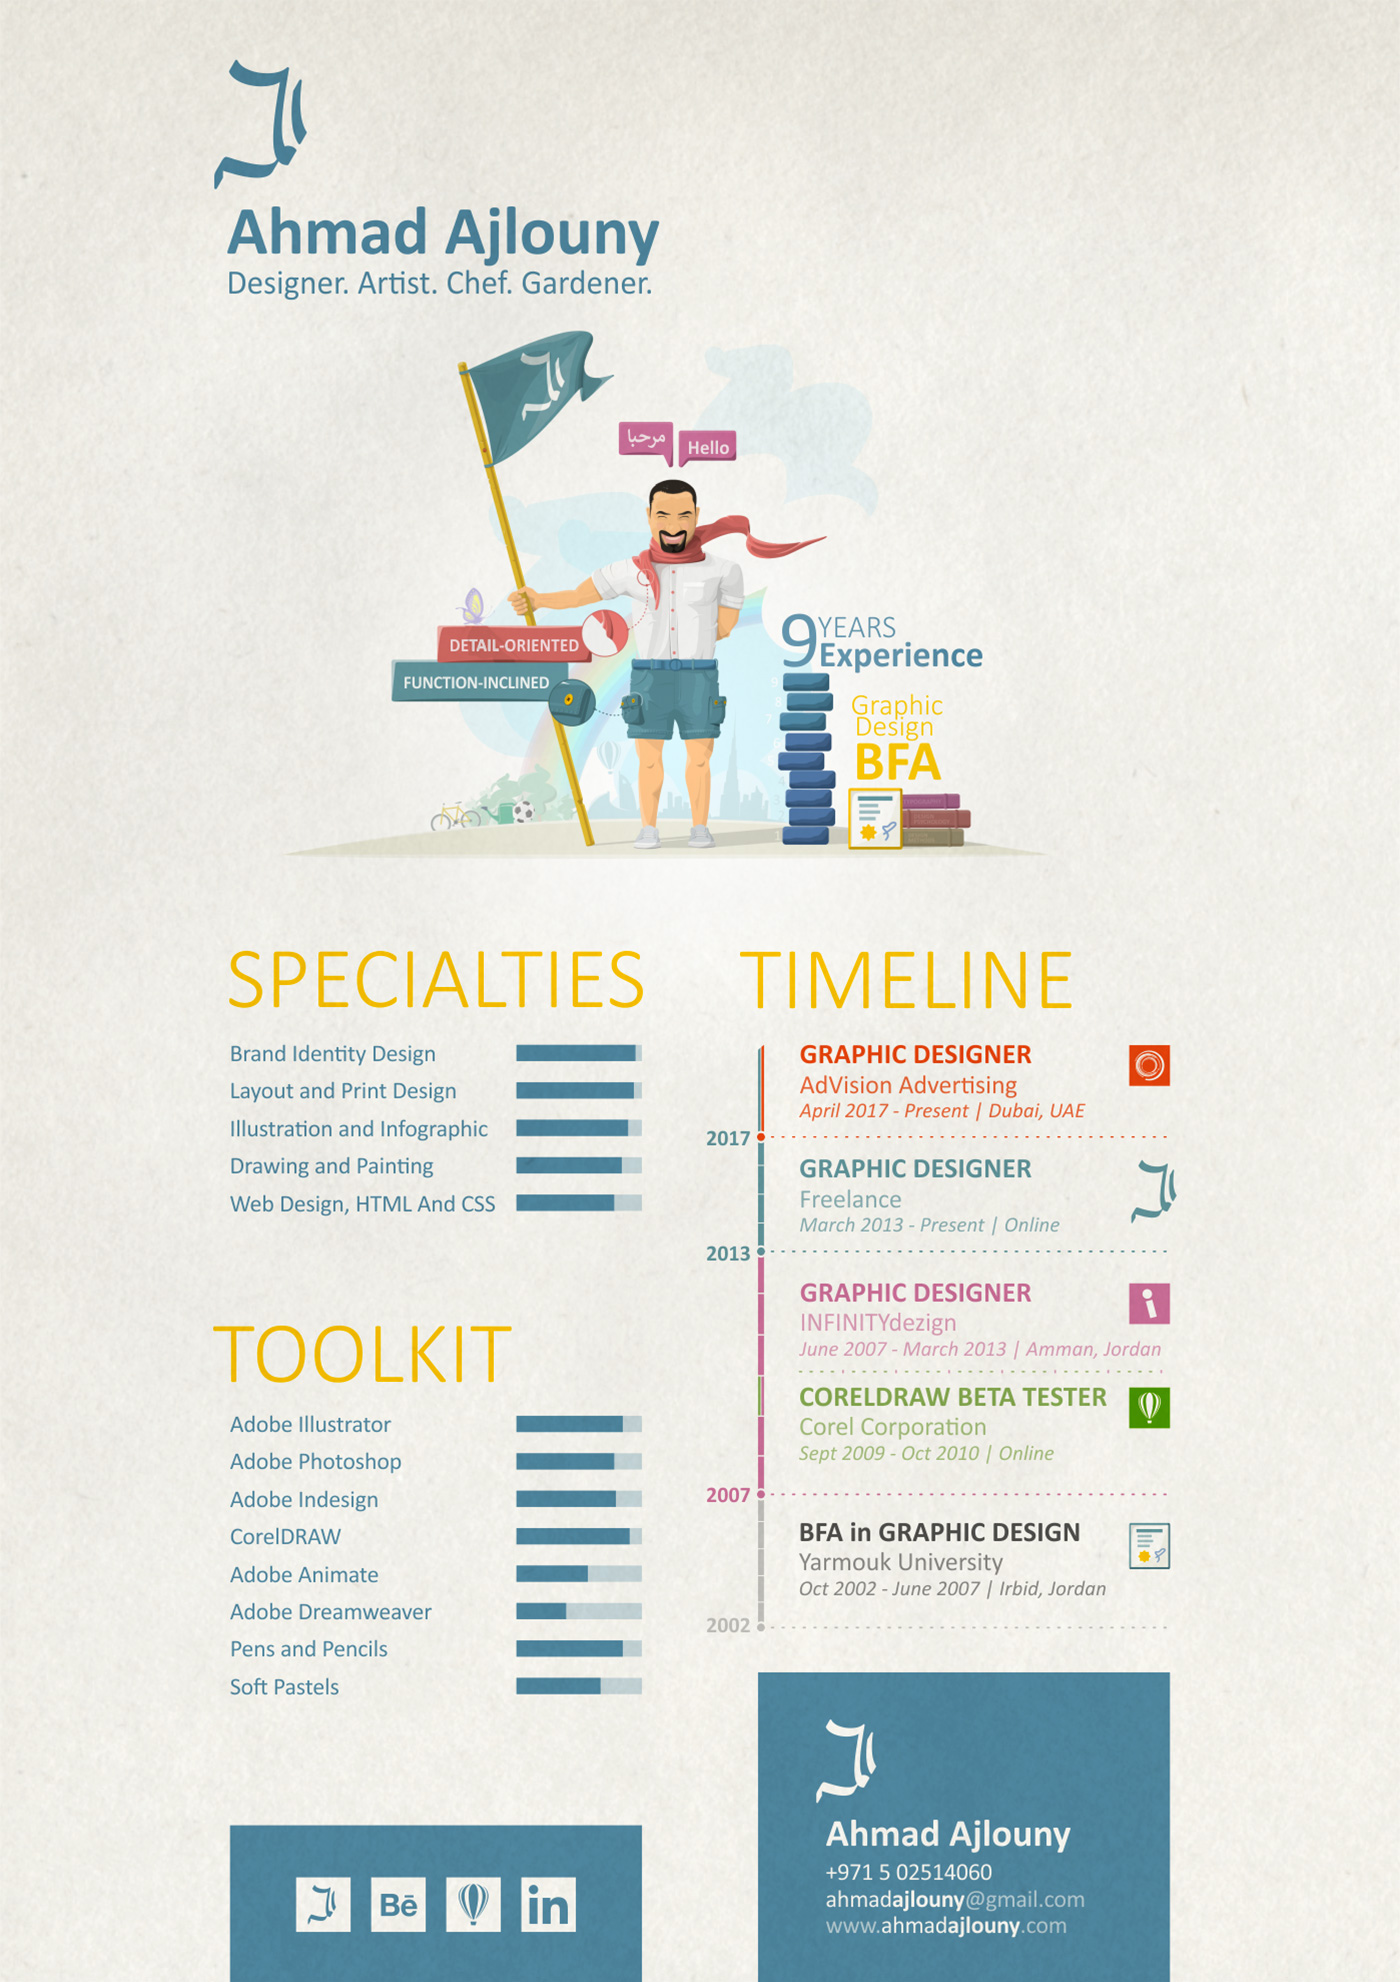 Resume infographic ILLUSTRATION  Ahmad Ajlouny